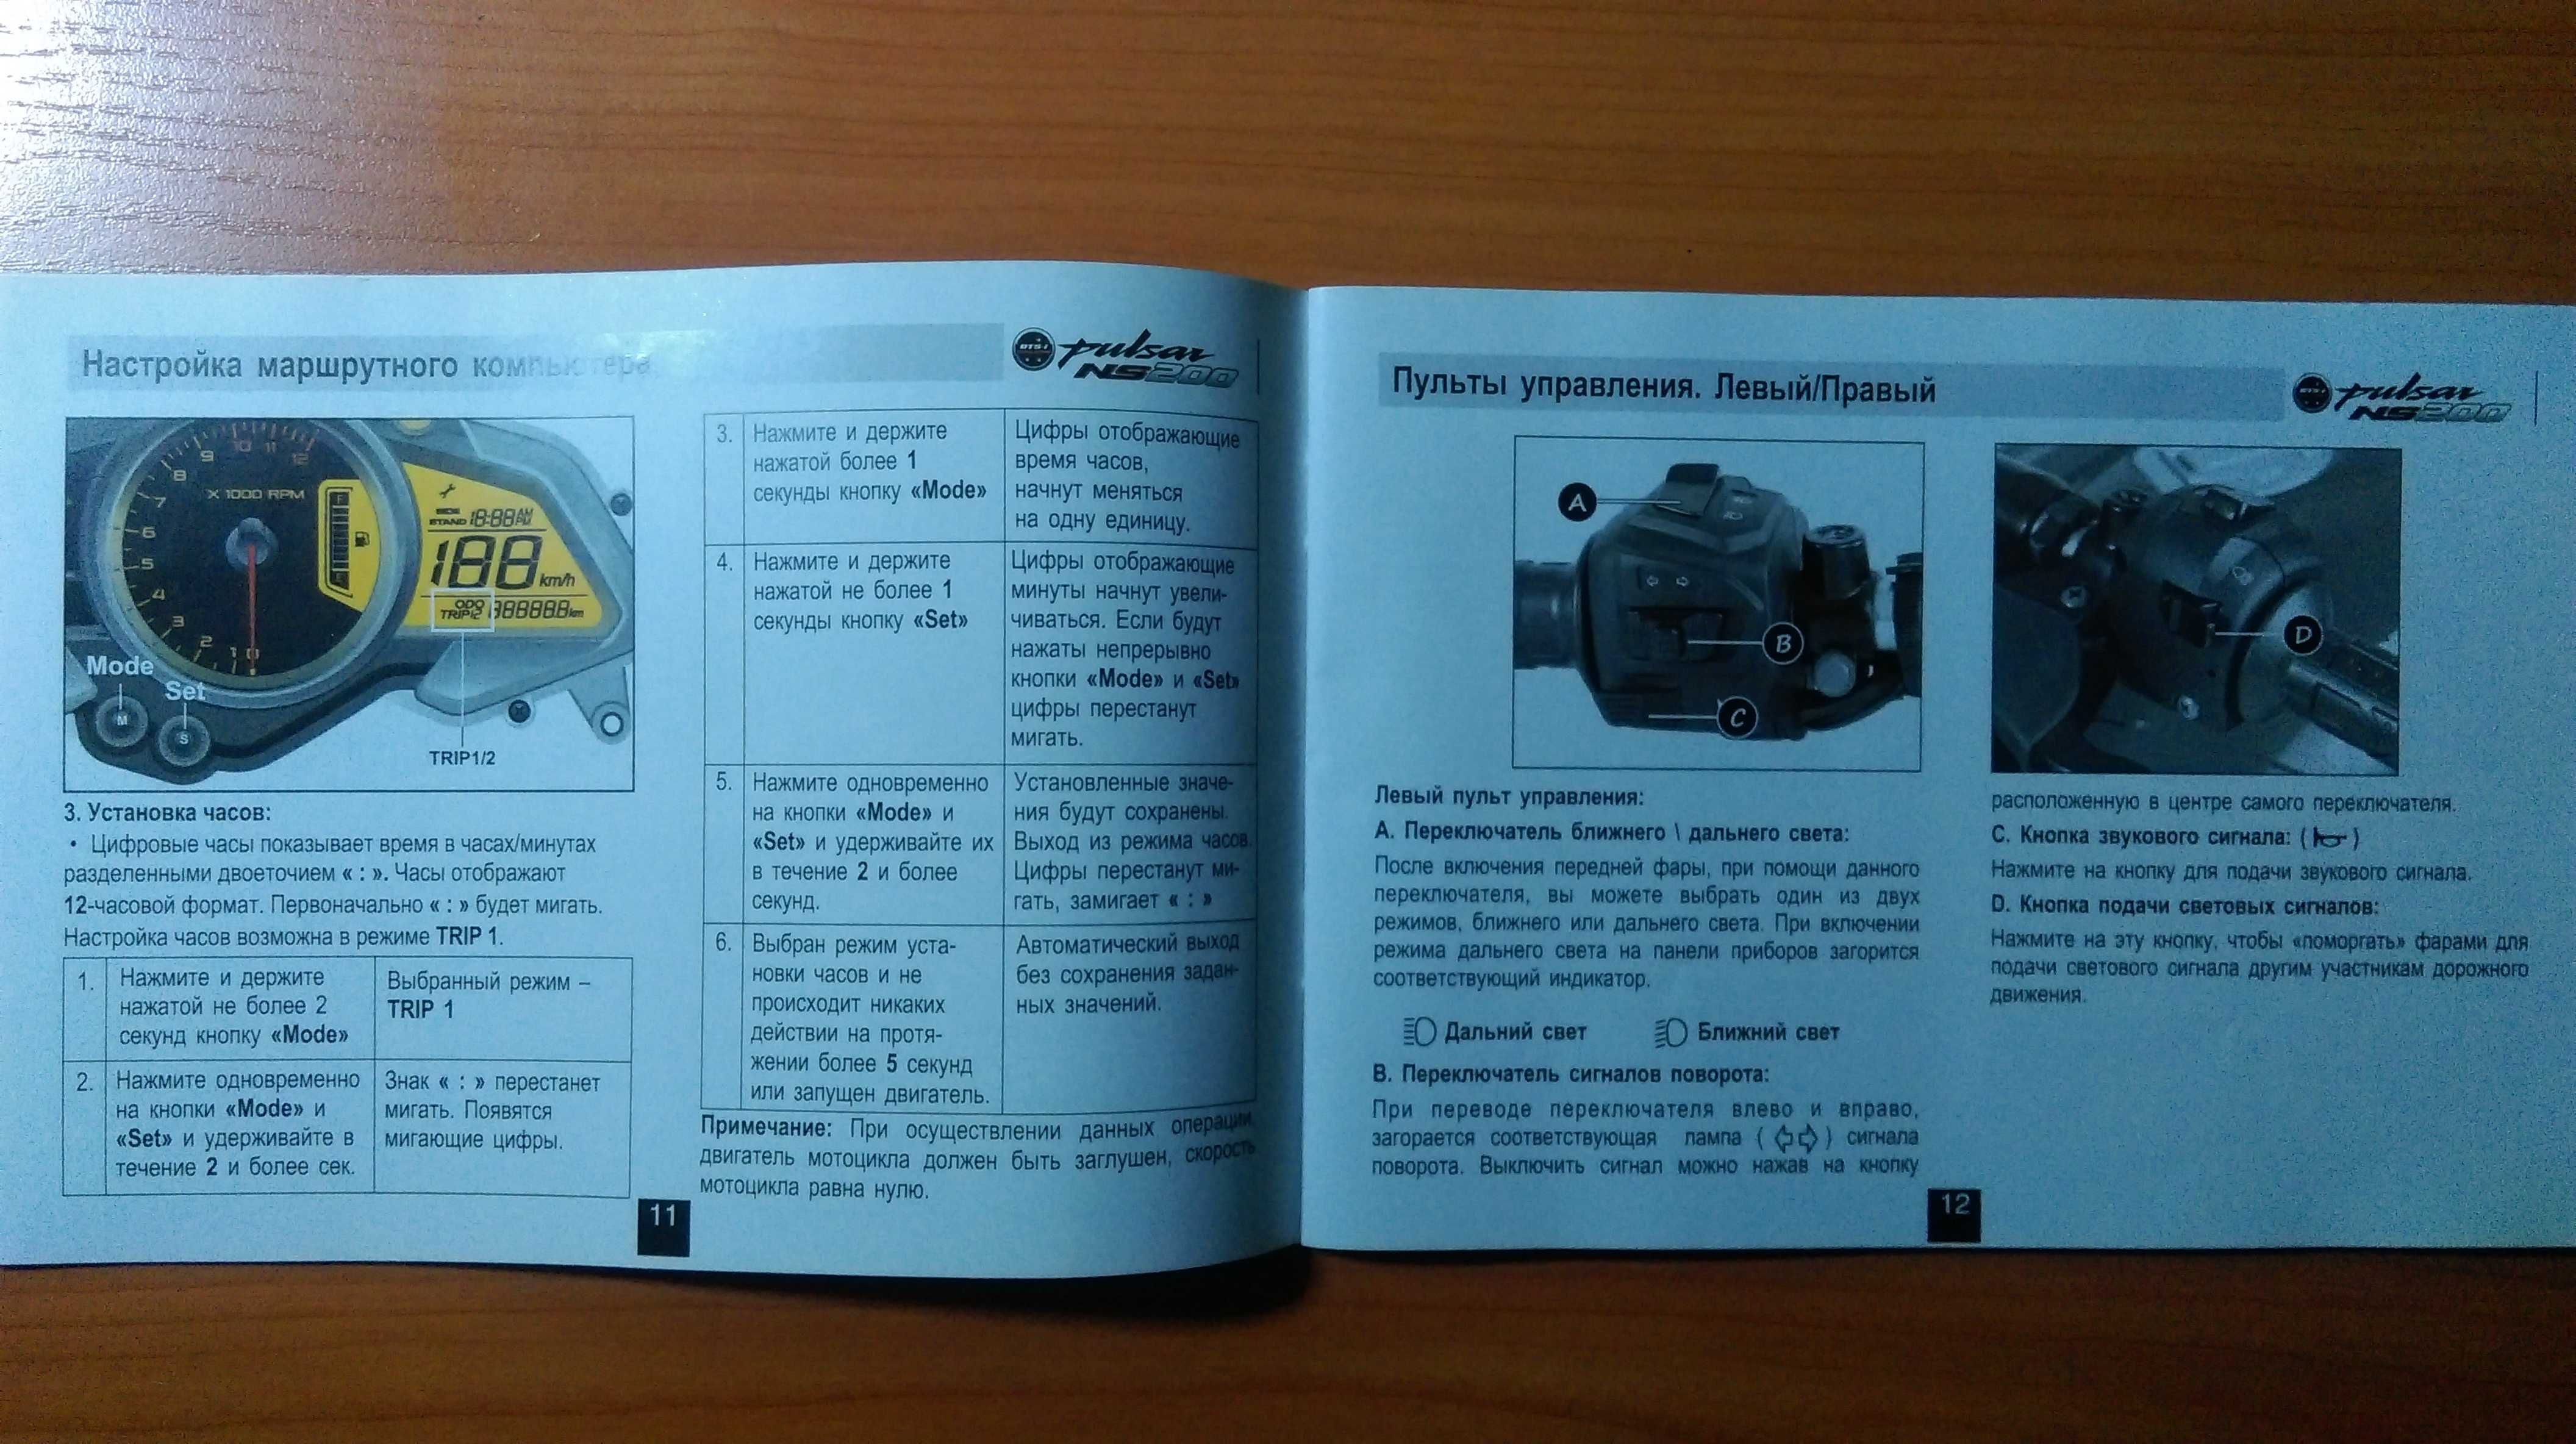 Bajaj Pulsar NS200 - руководство по эксплуатации (не заполненное).